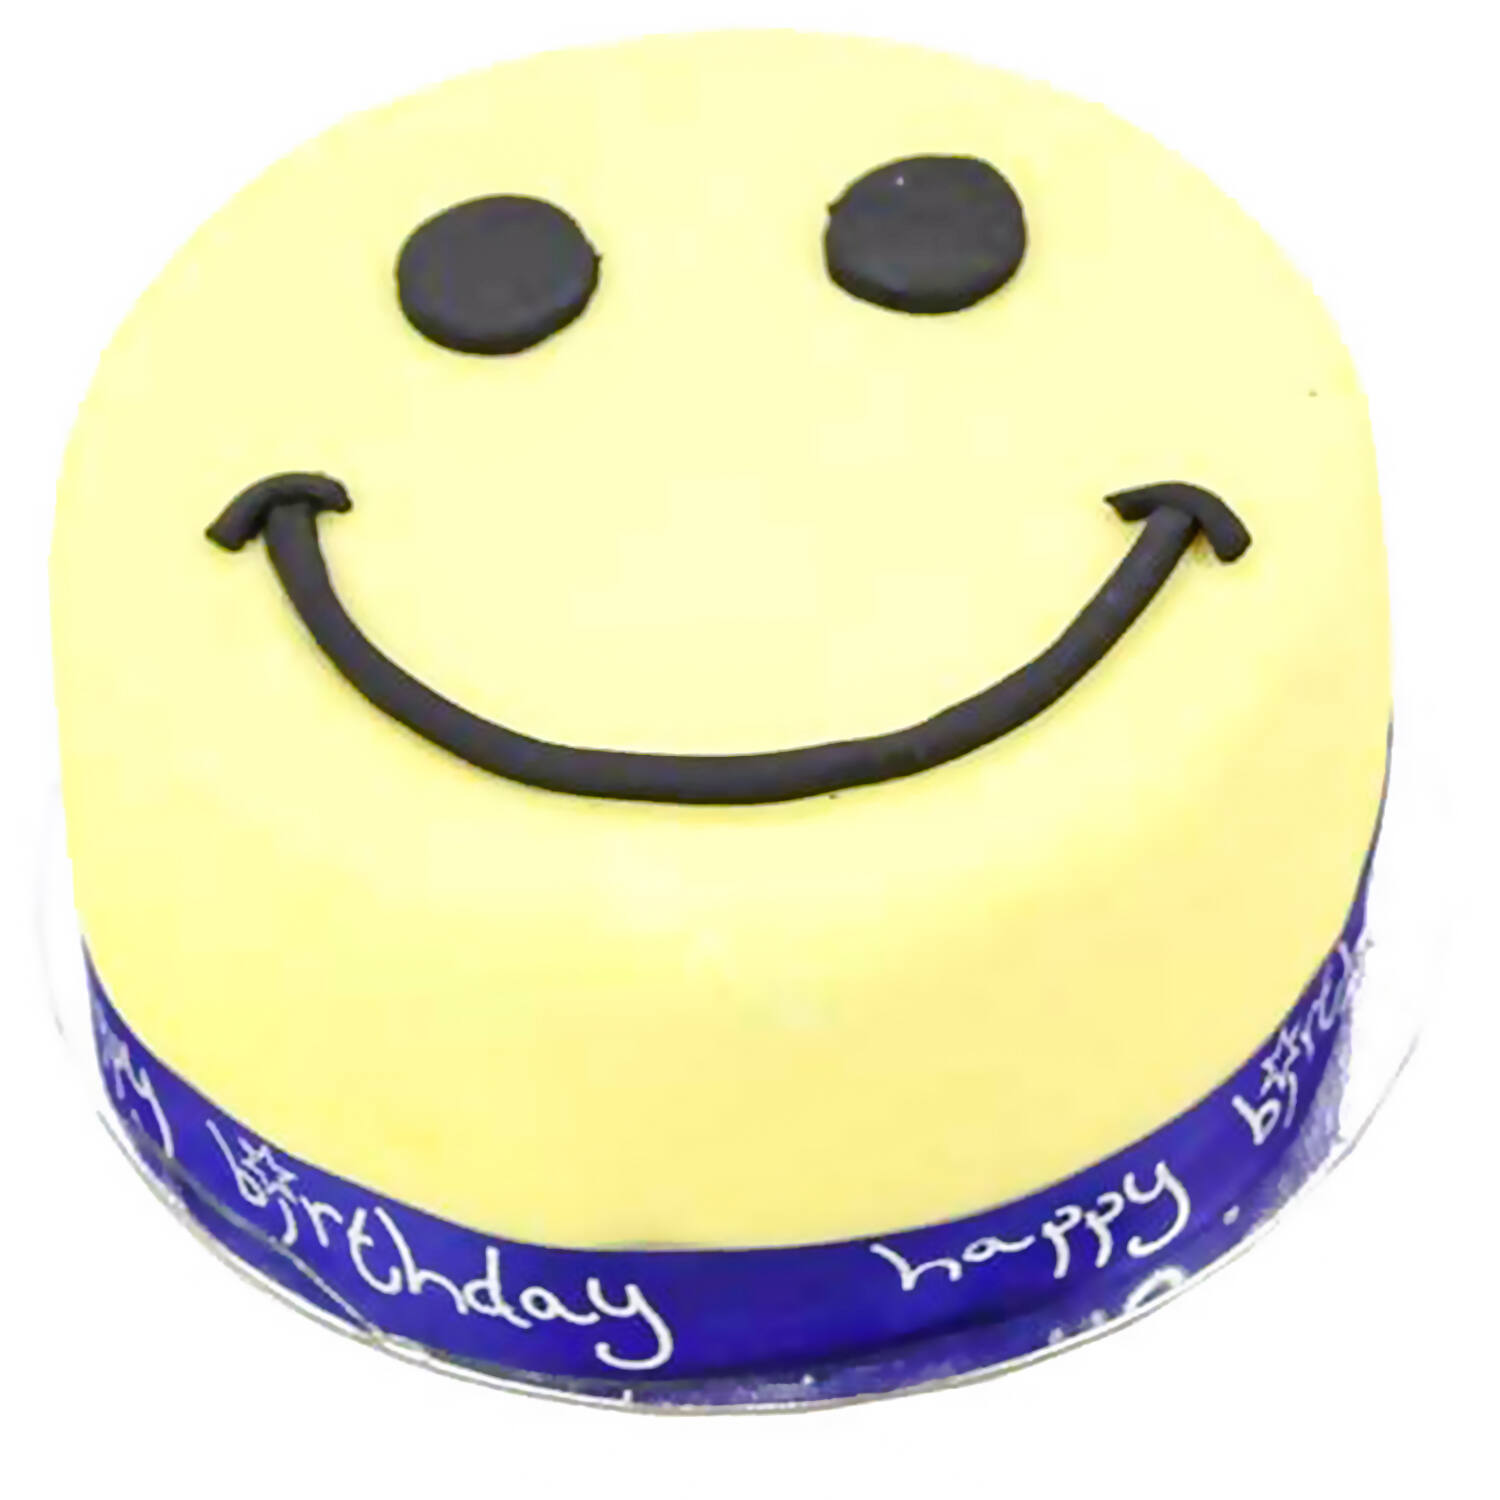 Smiley Face Cake | Gift Smiley Cake Online – Expressluv